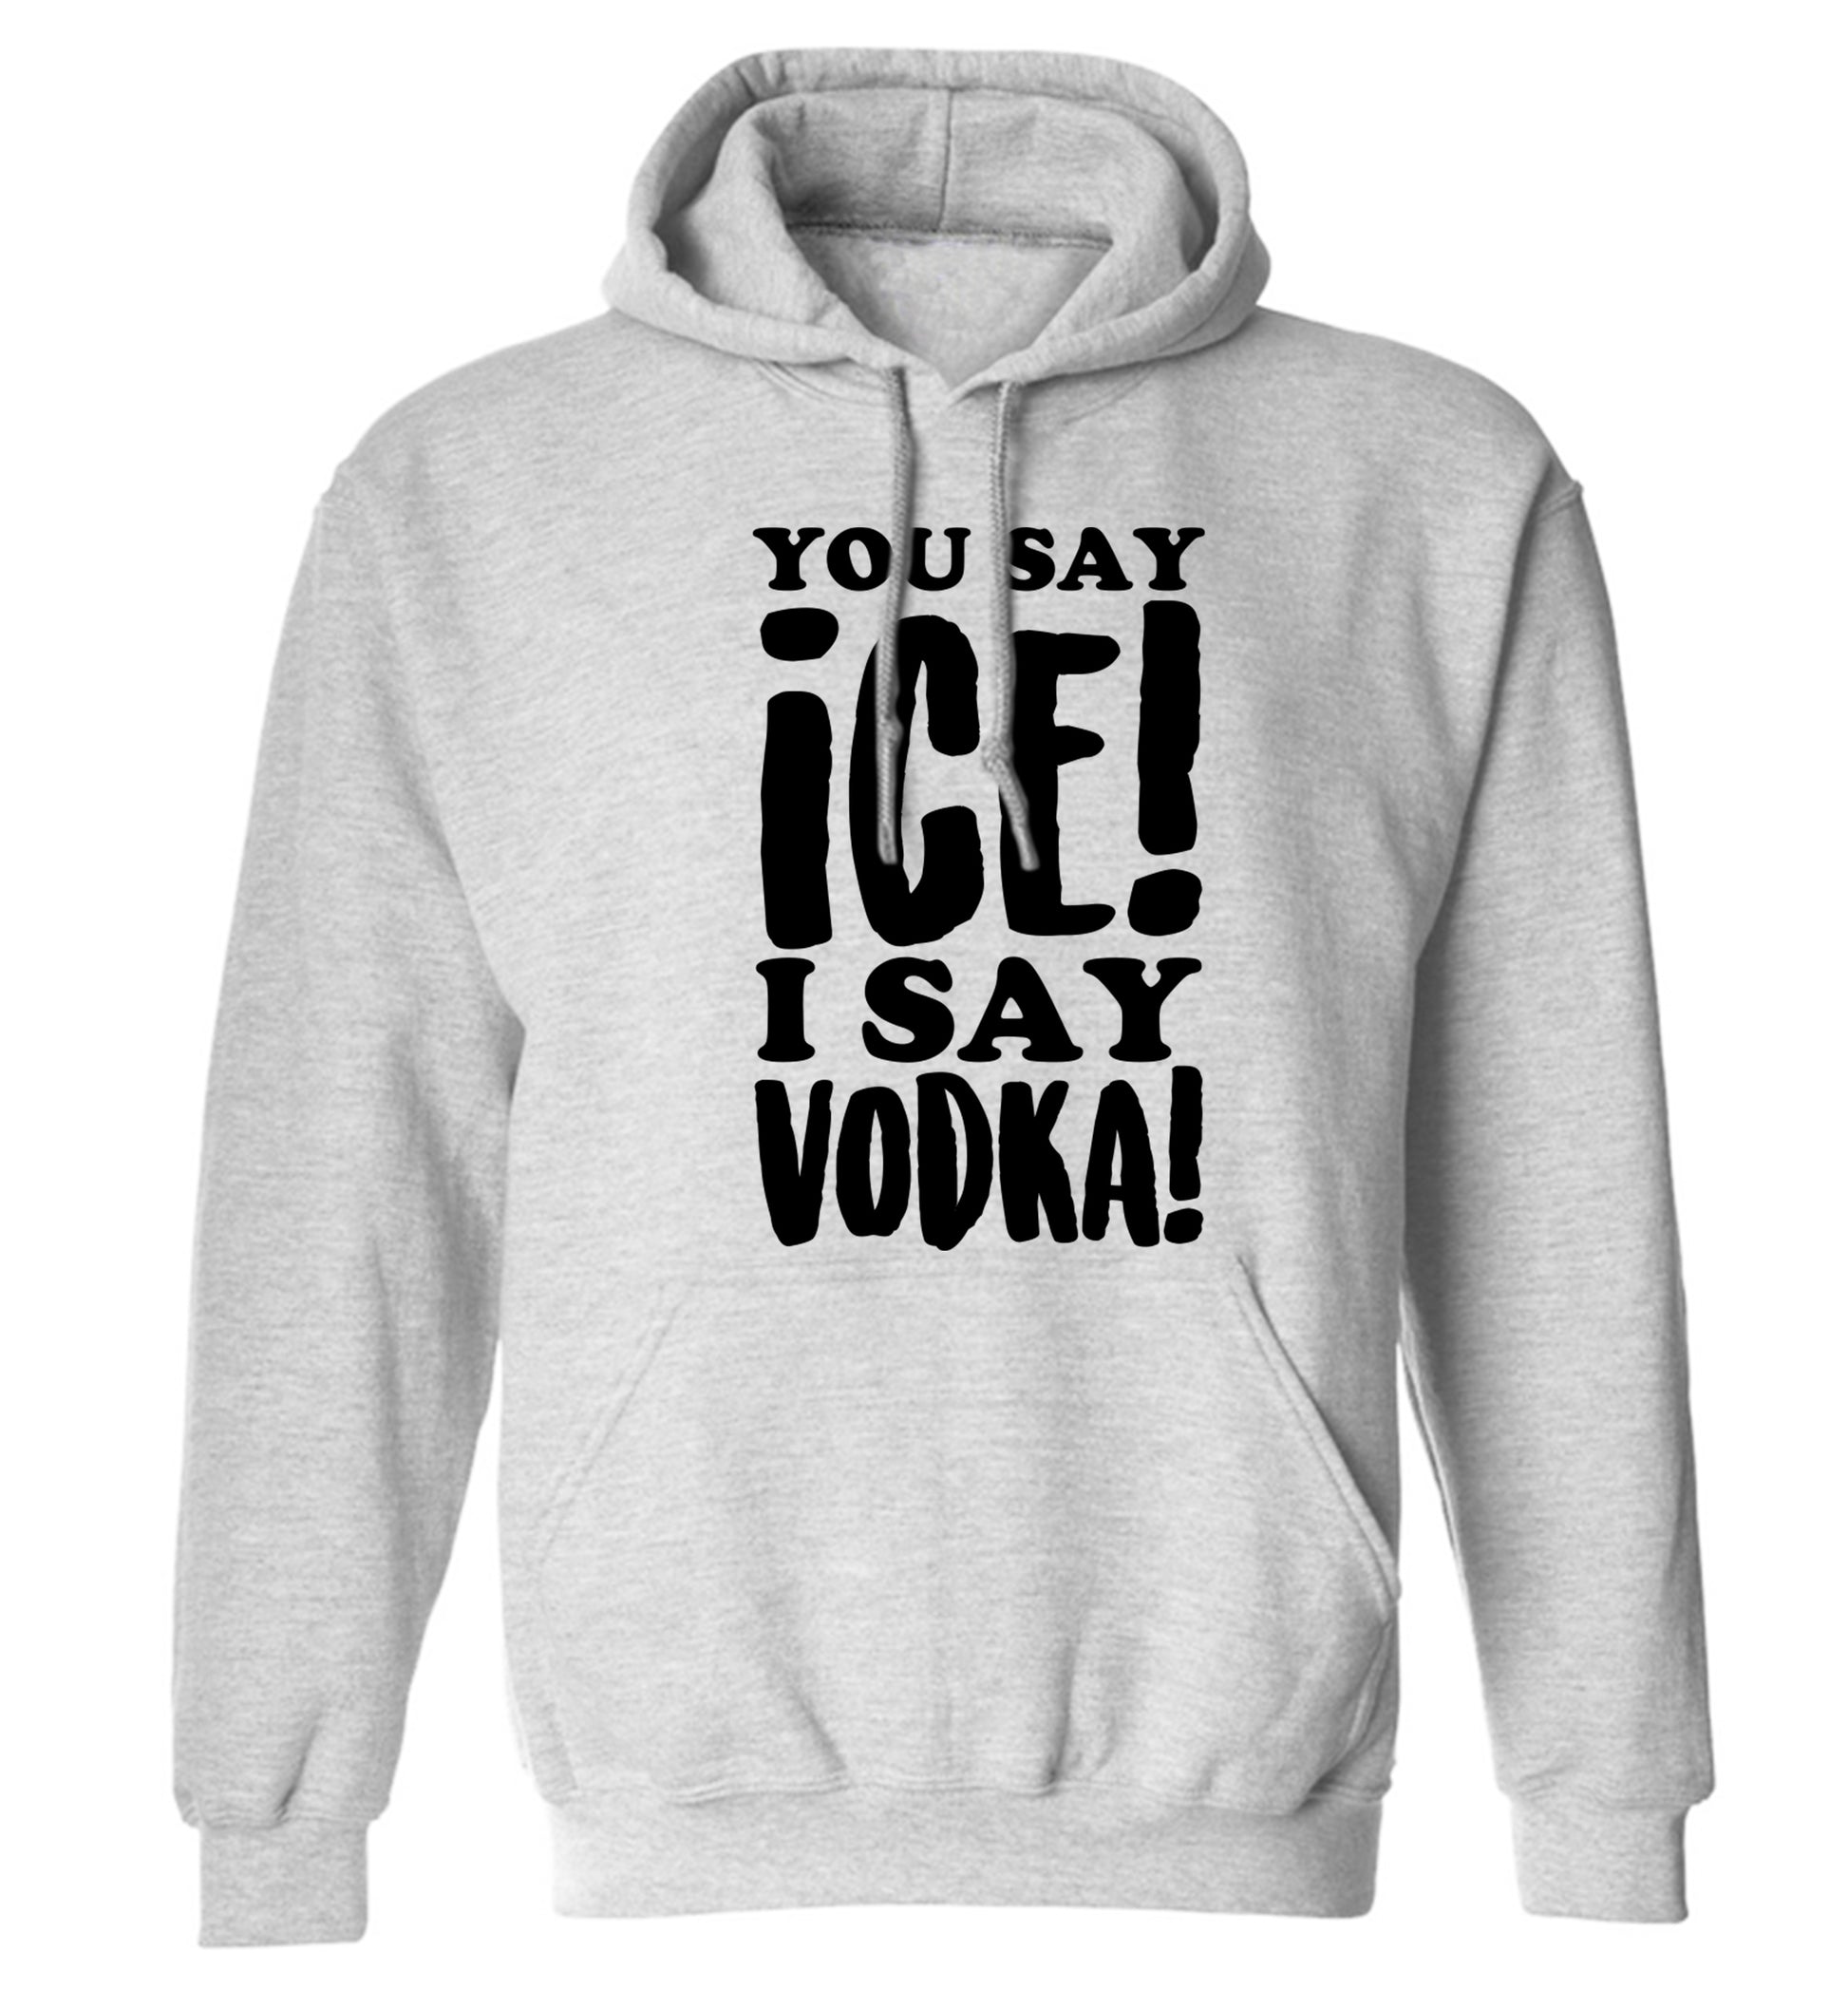 You say ice I say vodka! adults unisex grey hoodie 2XL